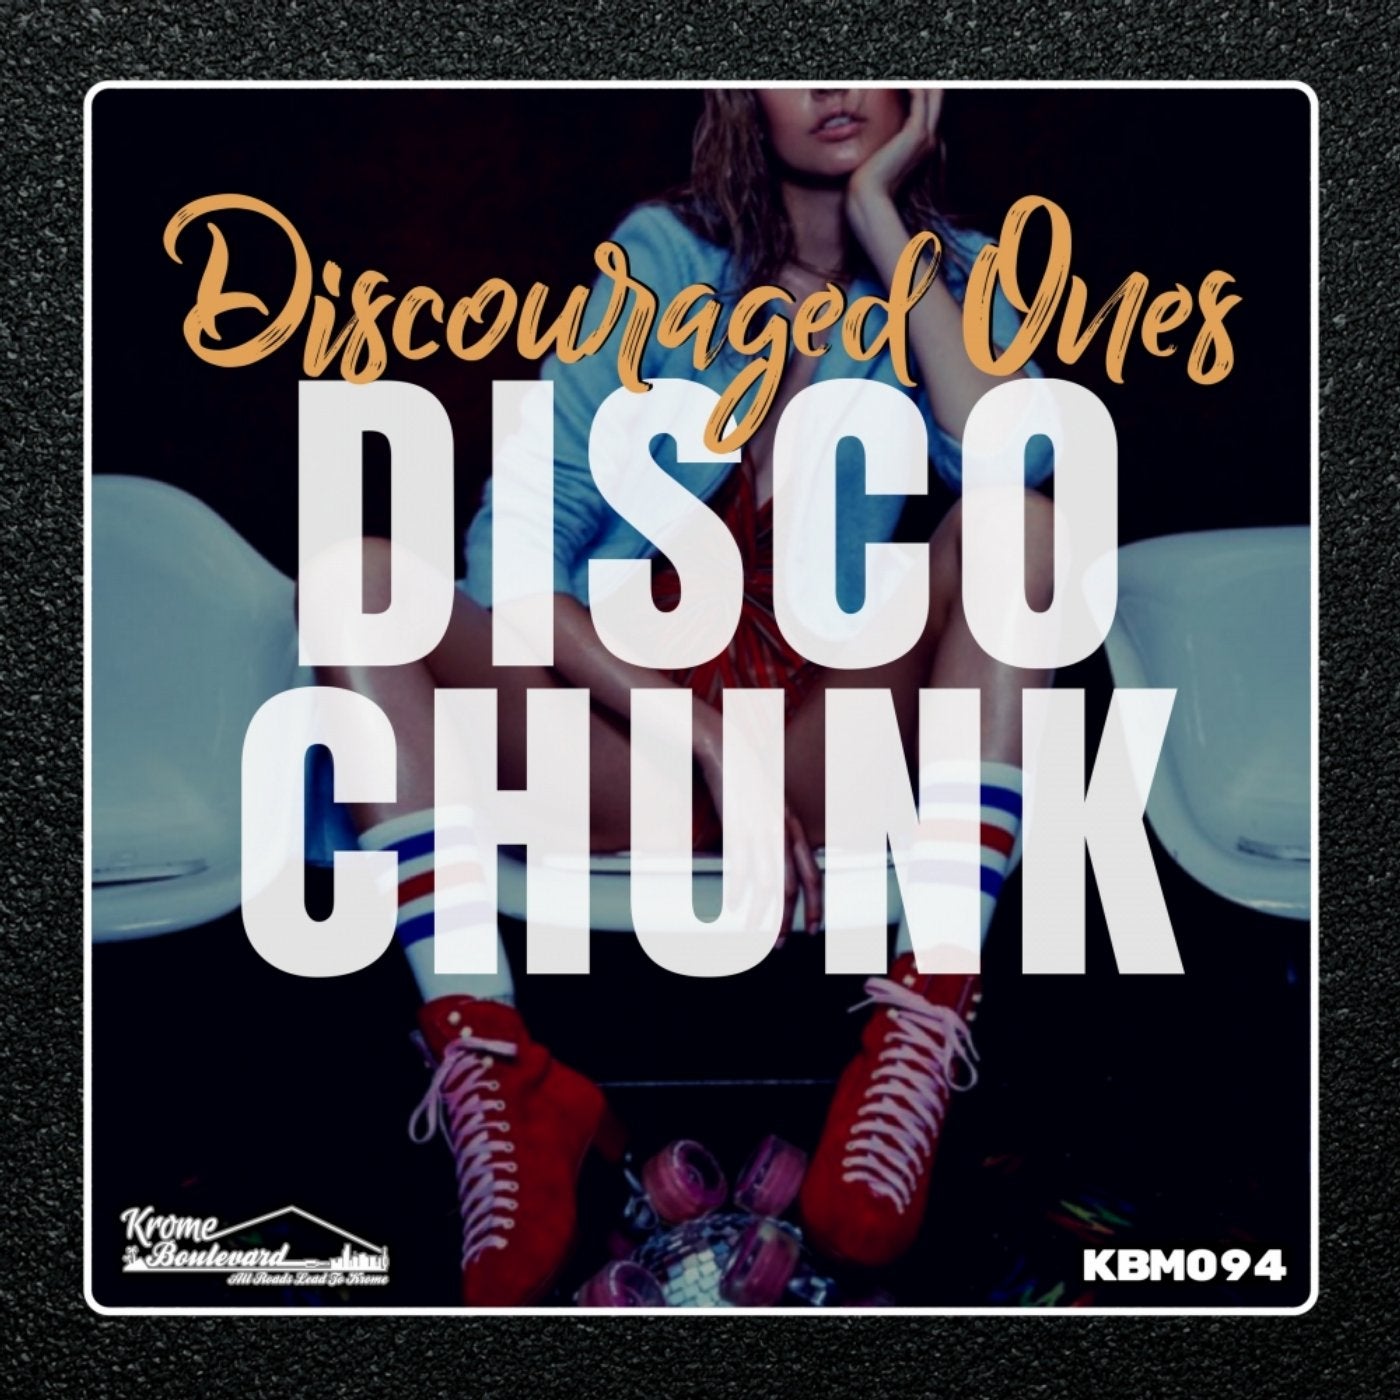 Disco Chunk